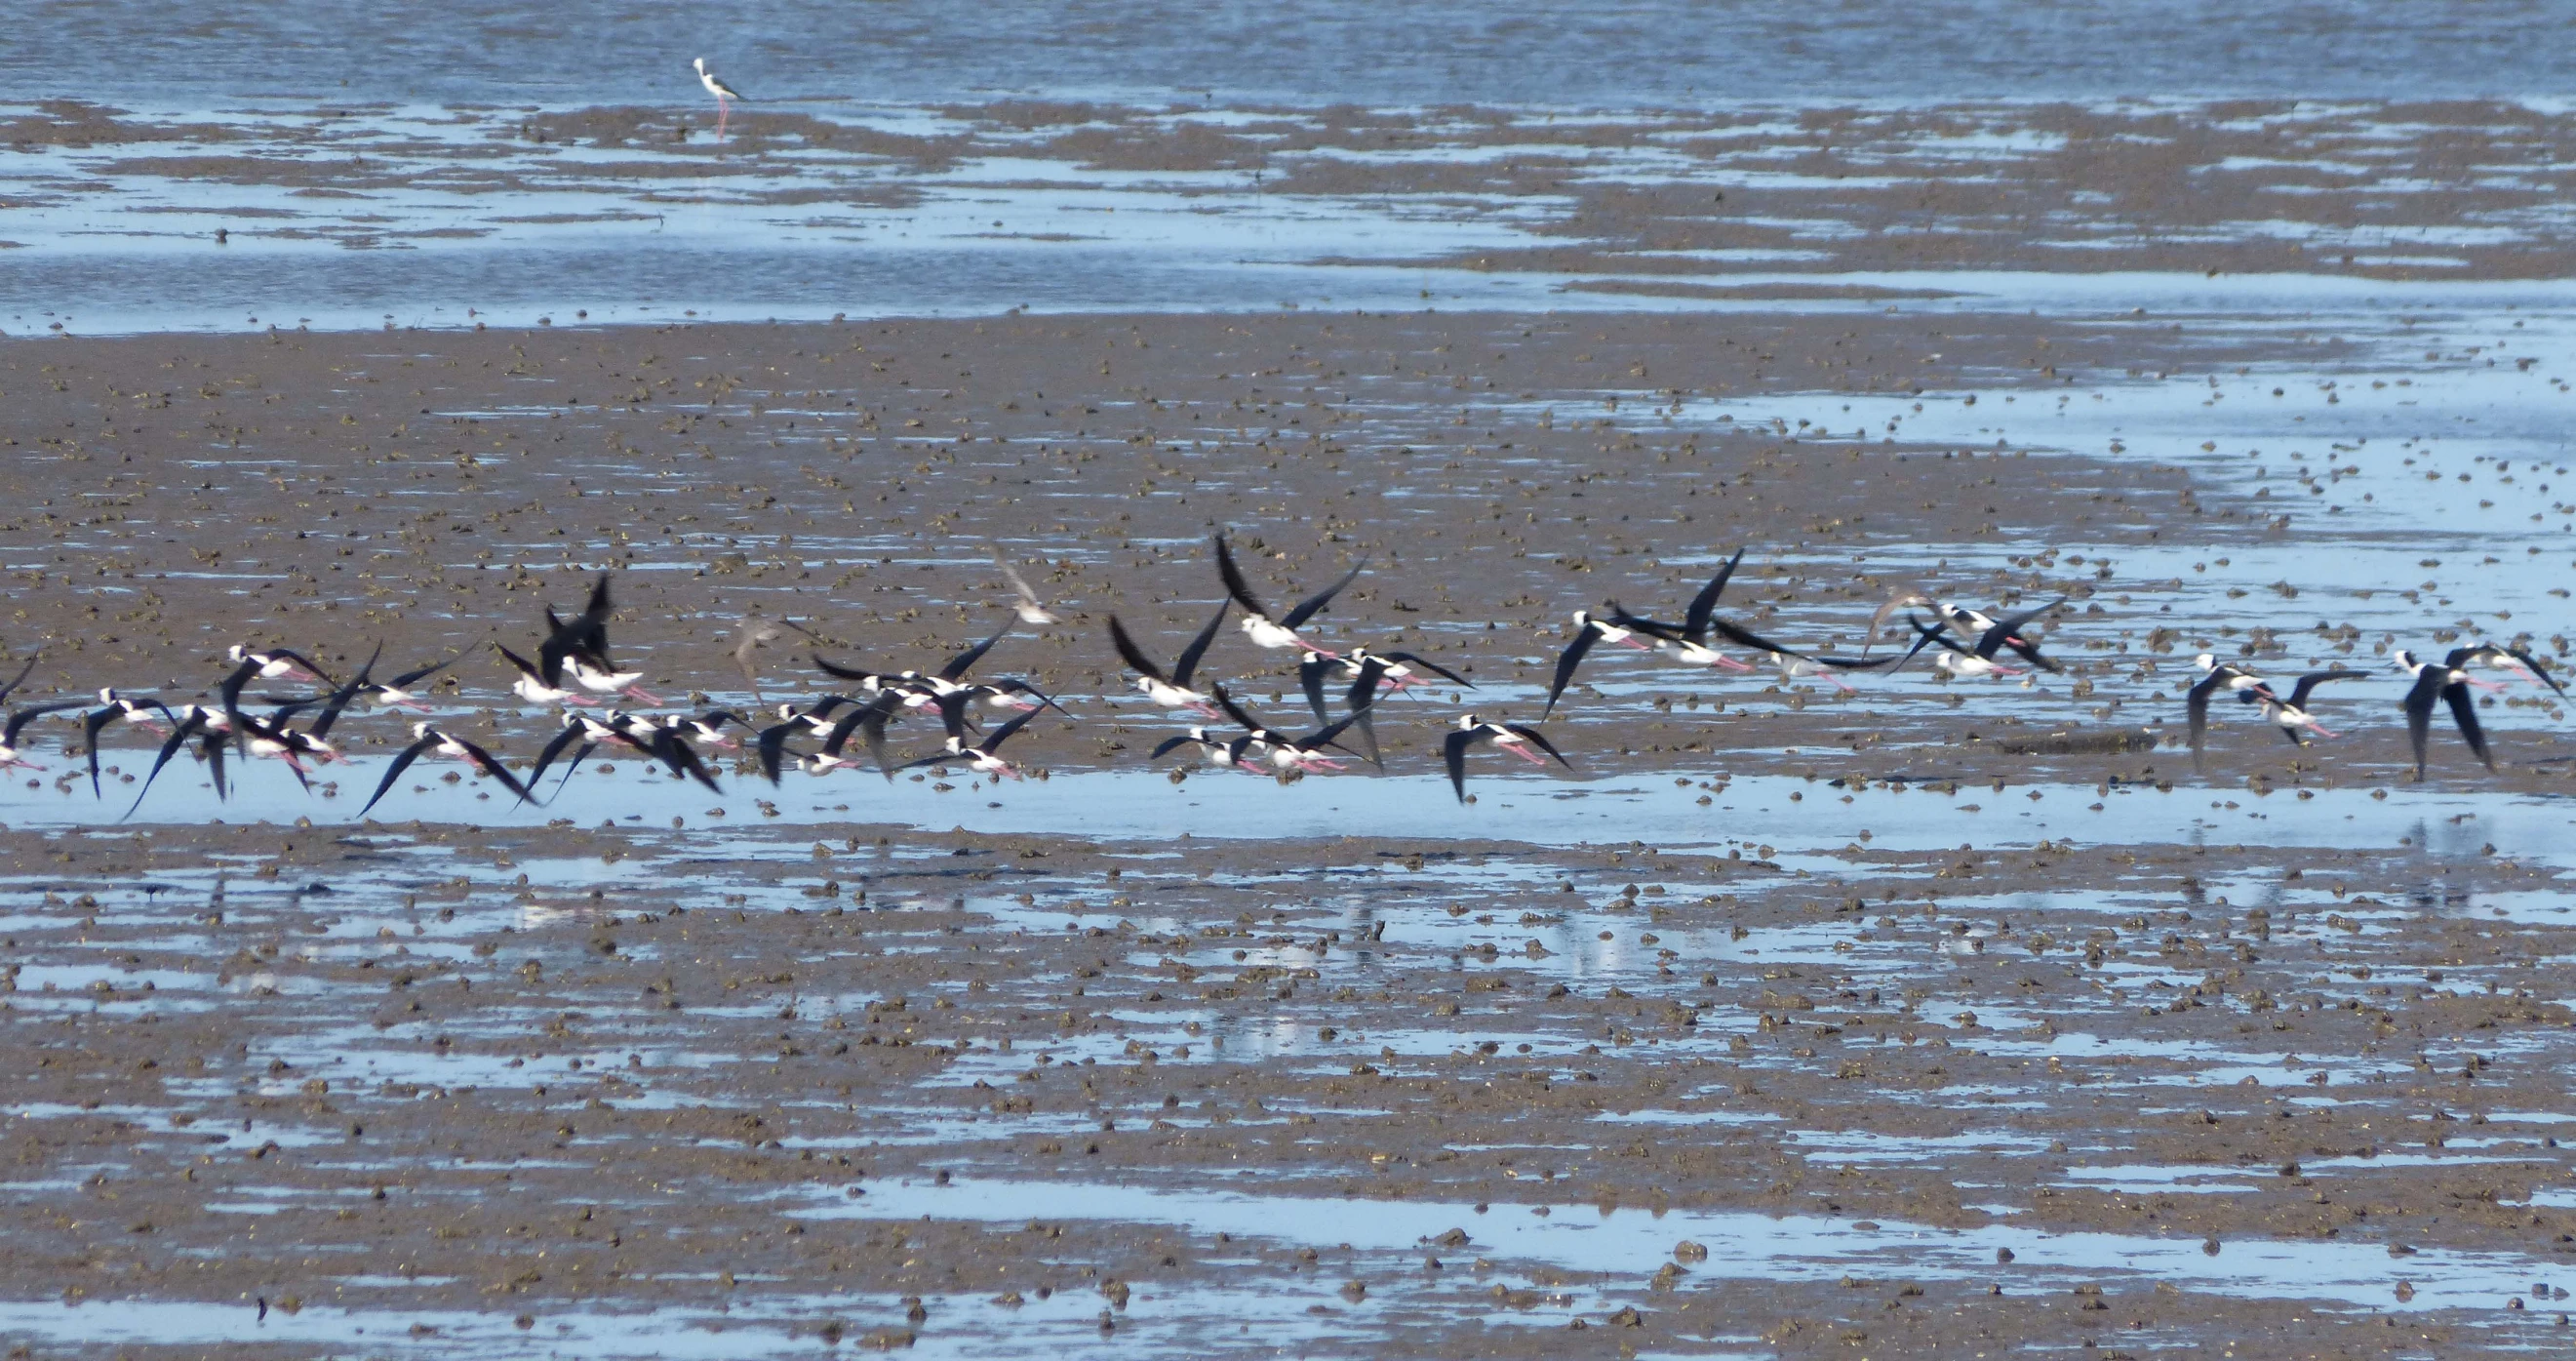 a bunch of birds standing on top of a sandy beach